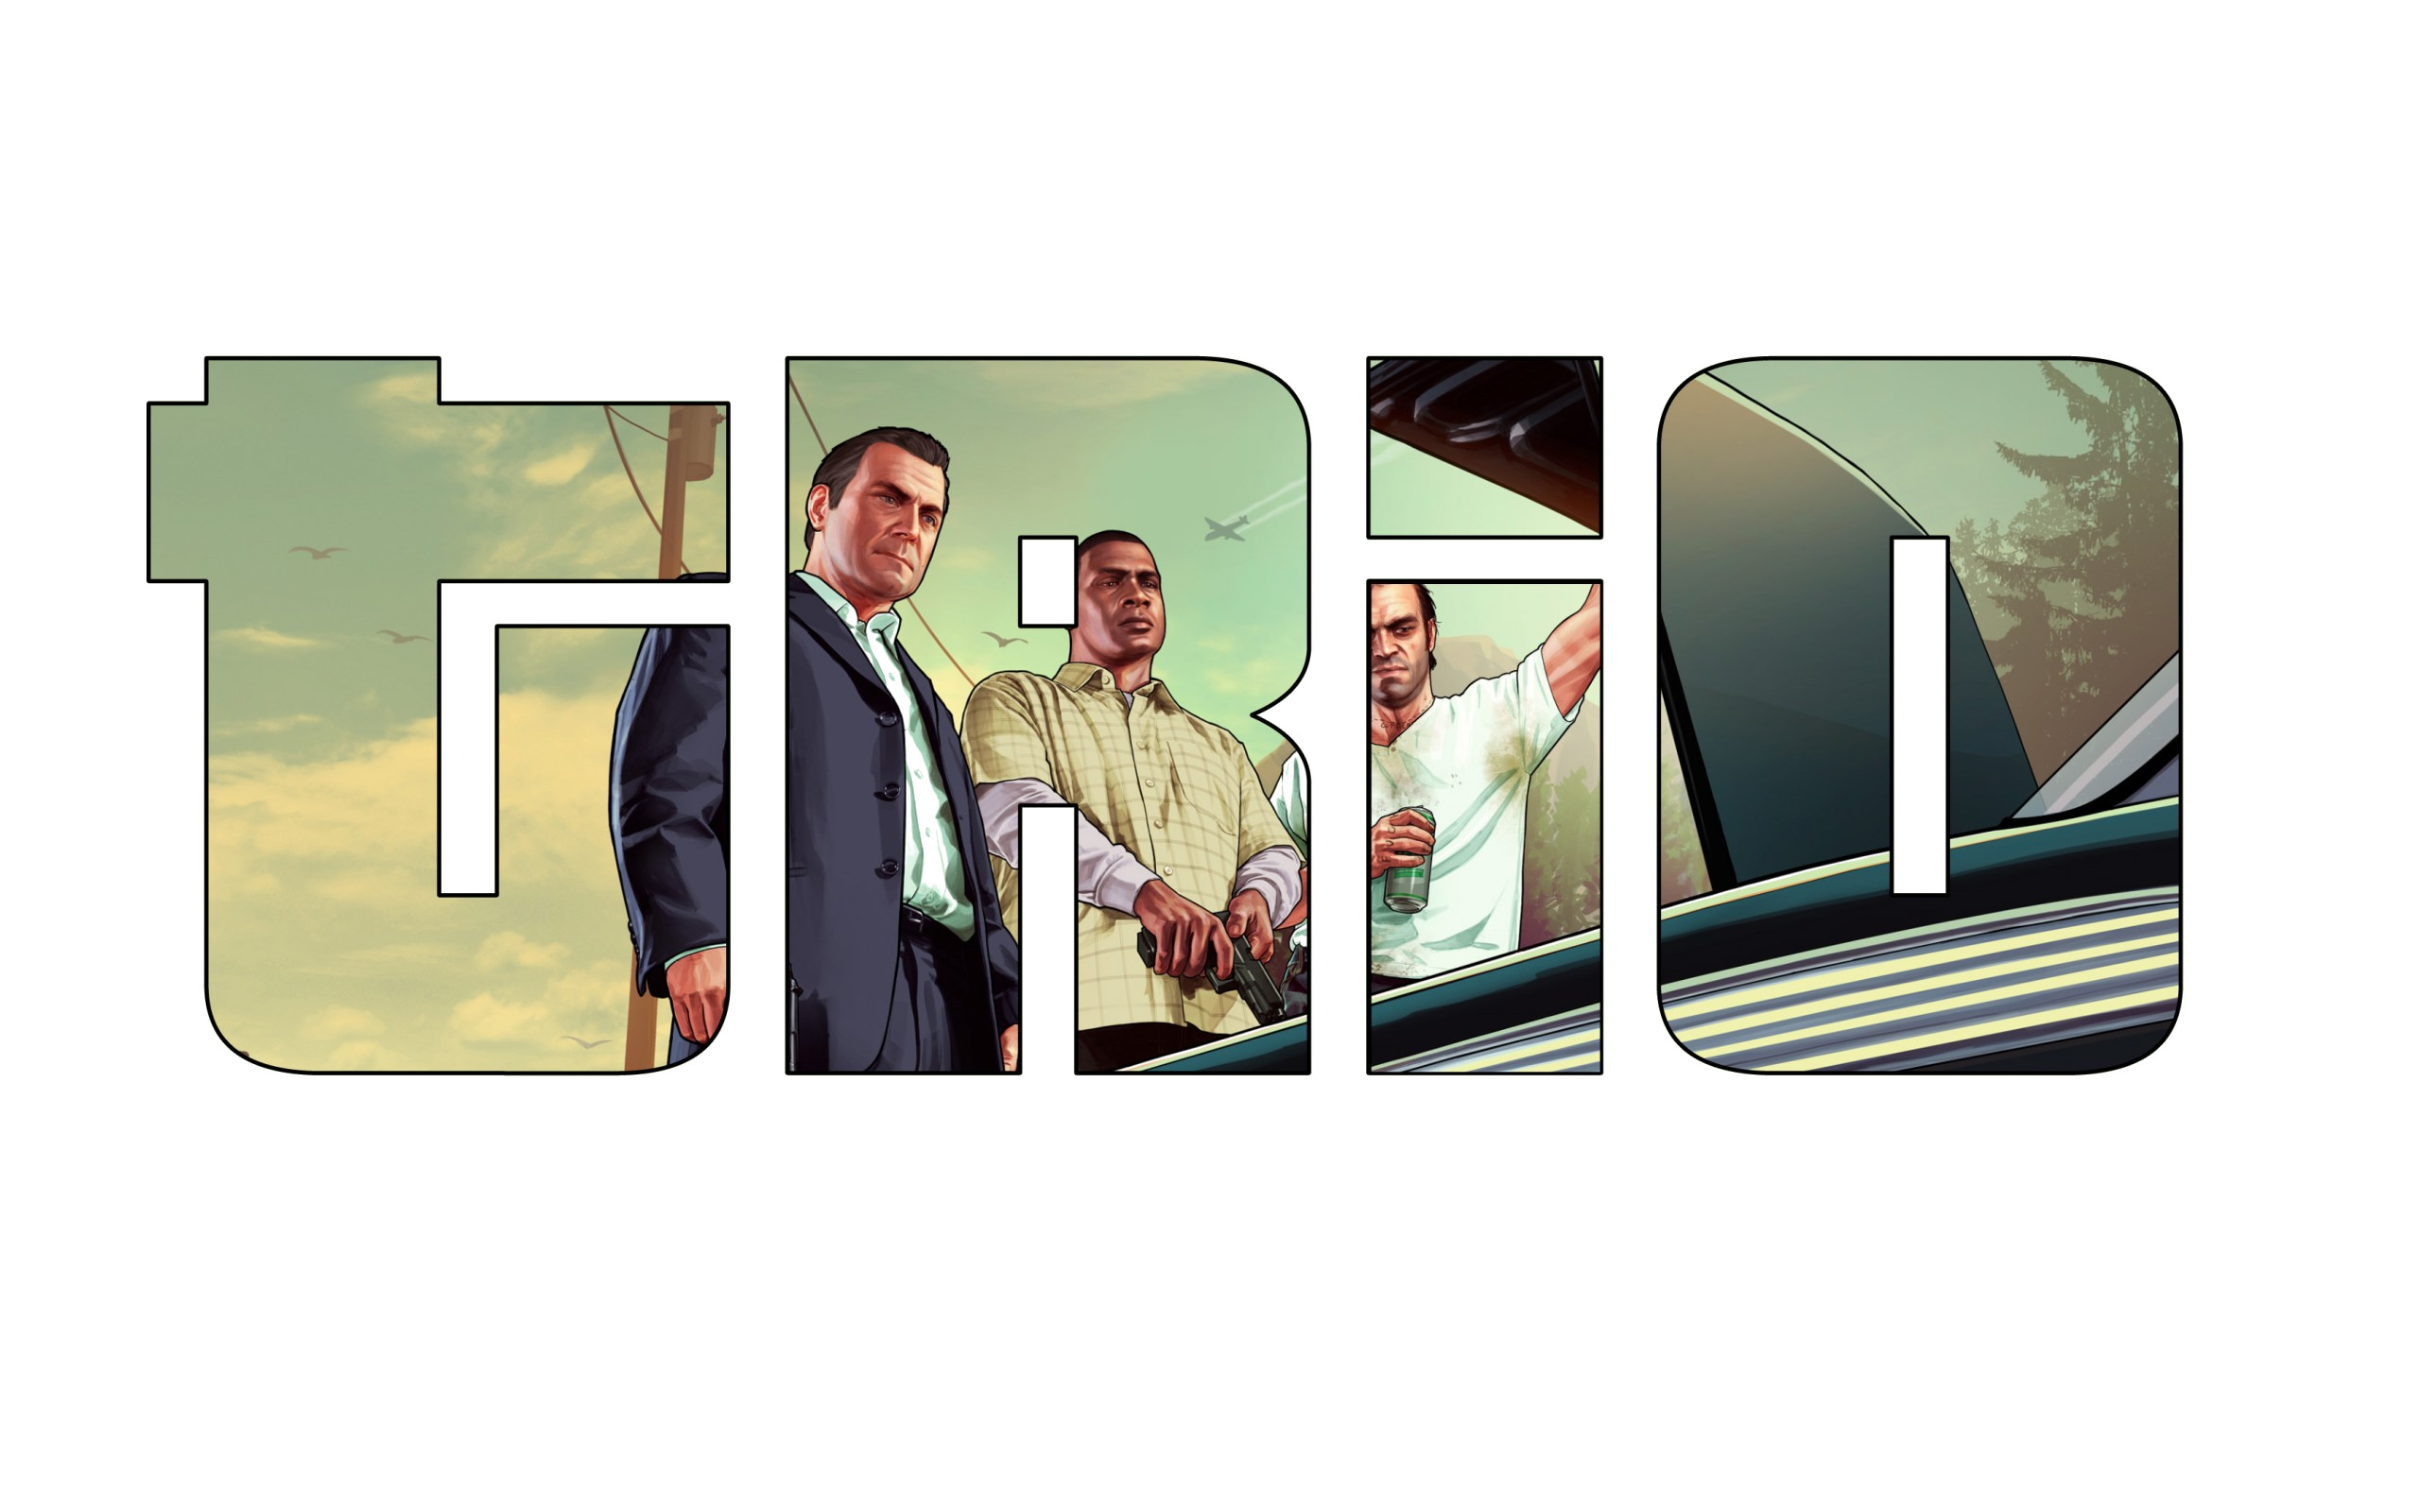 Grand Theft Auto V, Transparent Background Wallpaper